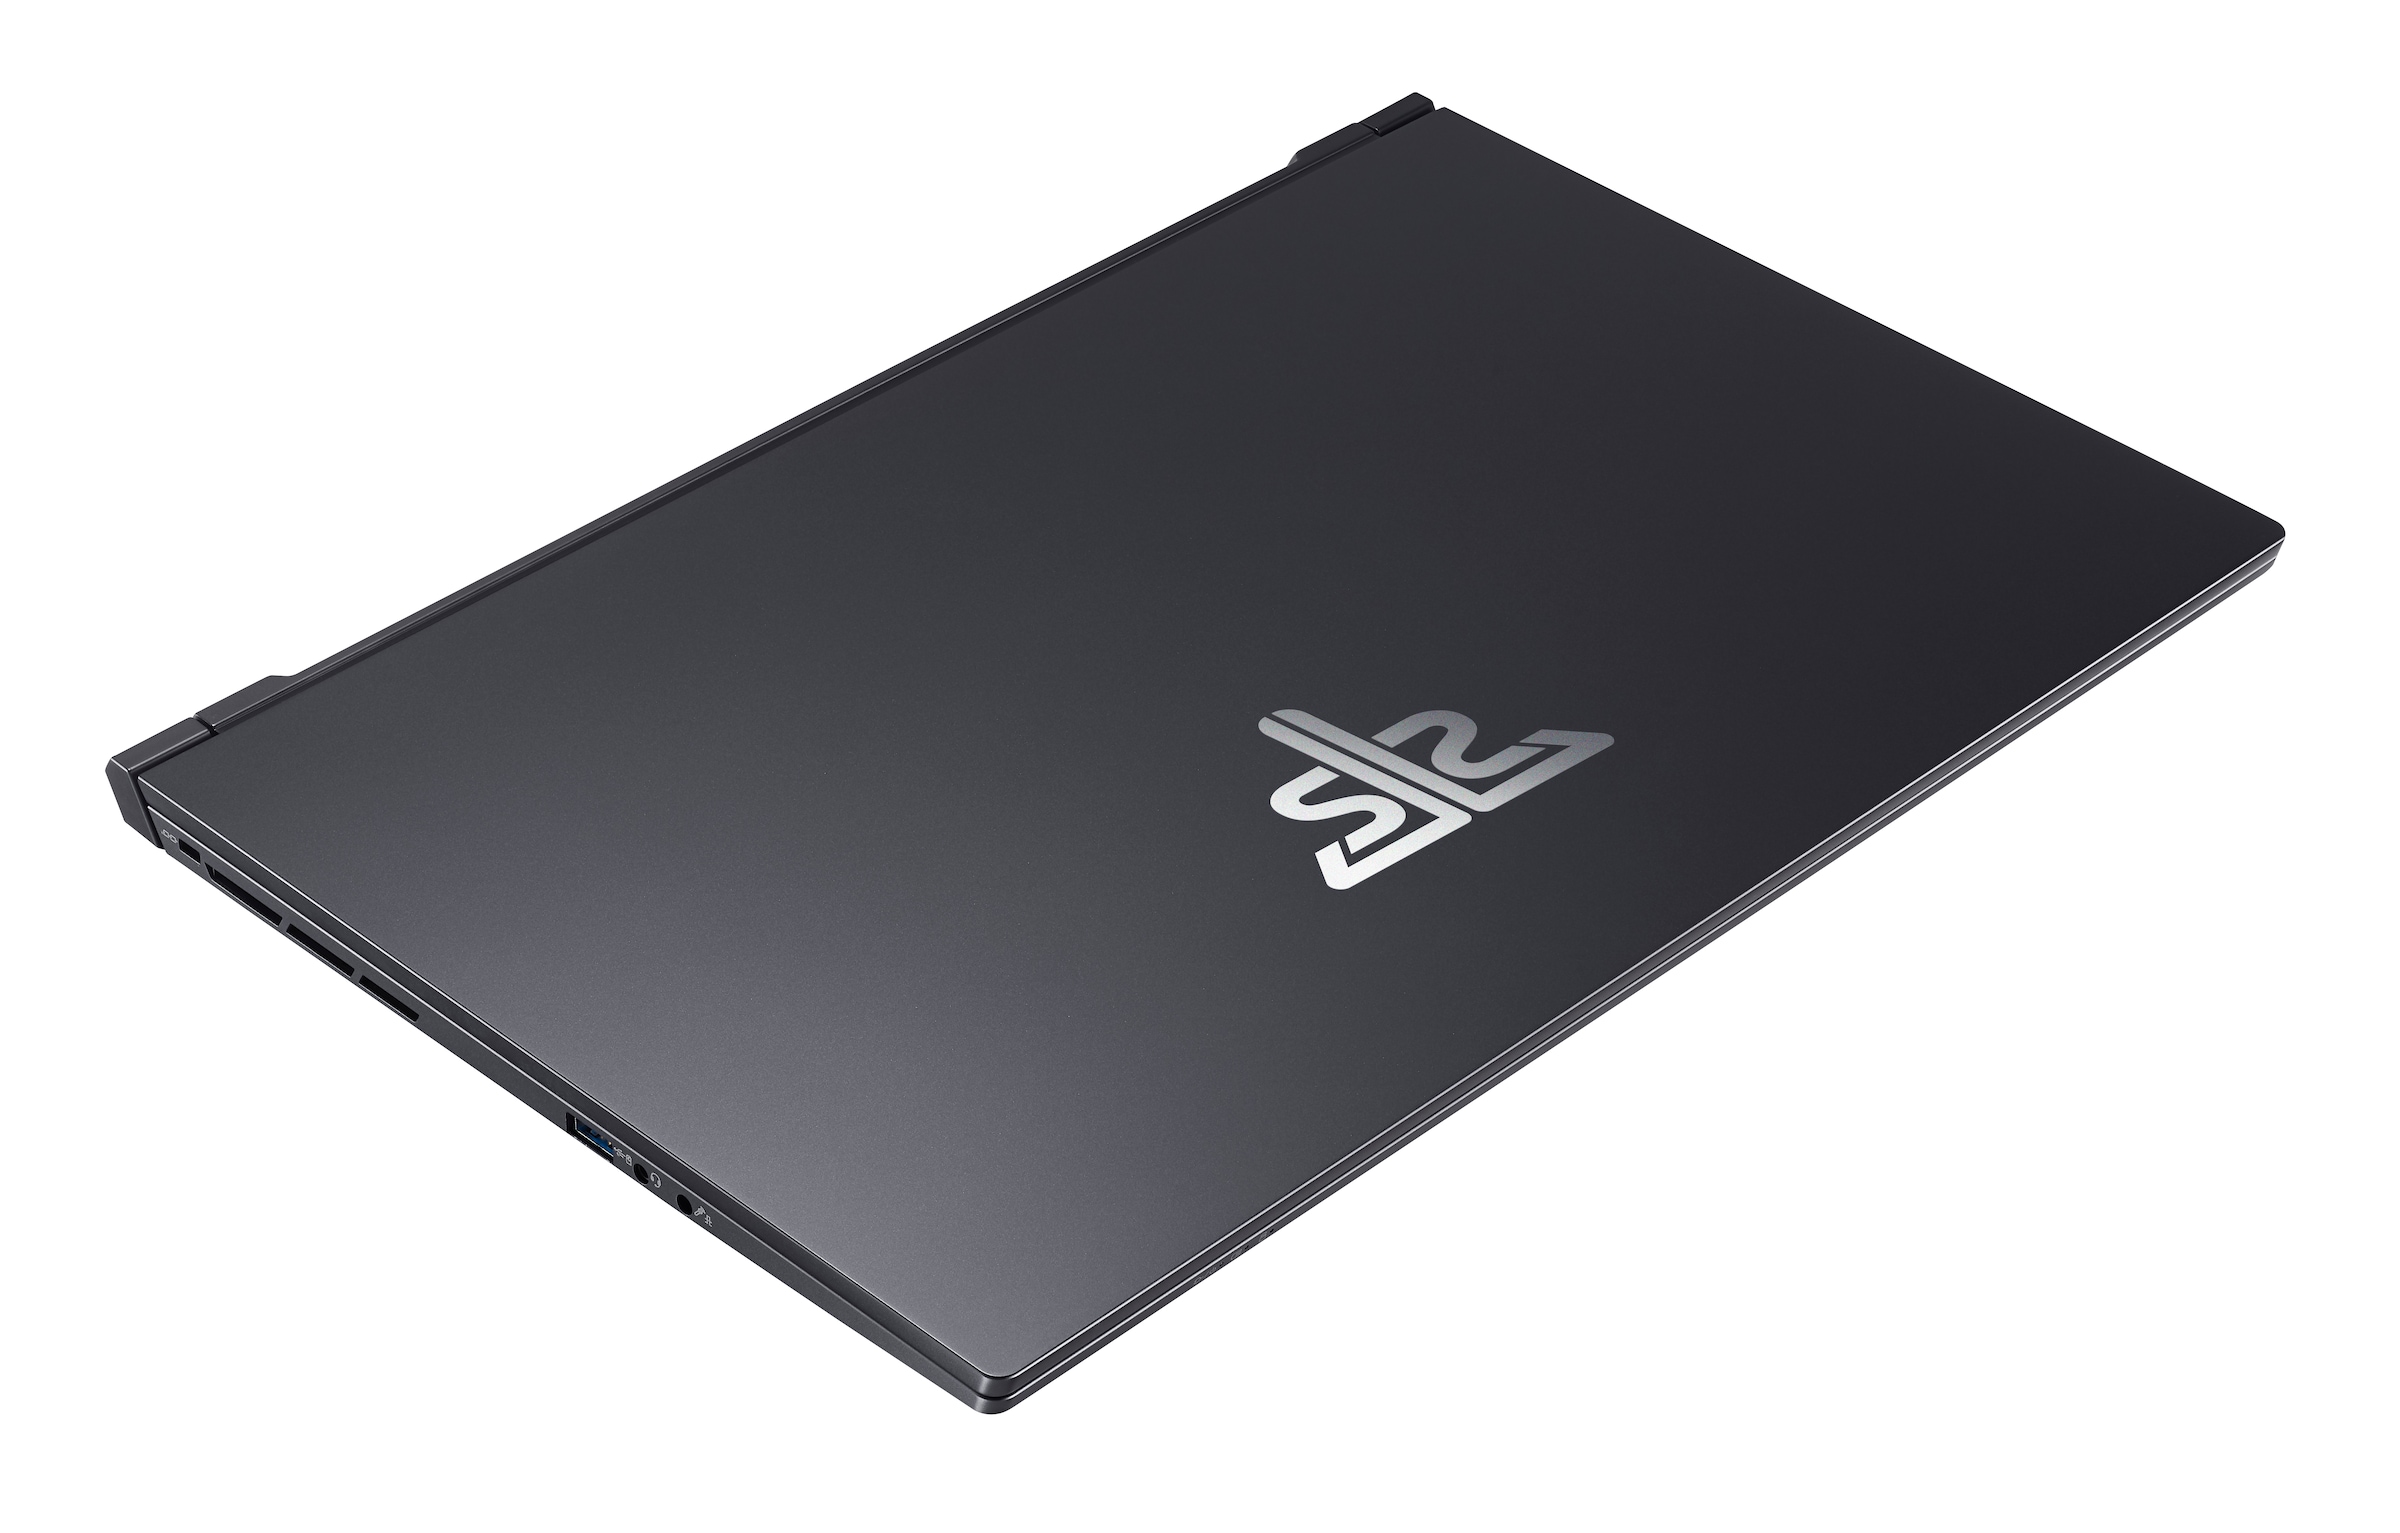 Hyrican Gaming-Notebook »Striker 1667«, 39,62 cm, / 15,6 Zoll, Intel, Core i7, GeForce RTX 3080, 1000 GB SSD, Intel Core i7-11800H, 32 GB RAM, 240 Hz, ohne Betriebssystem